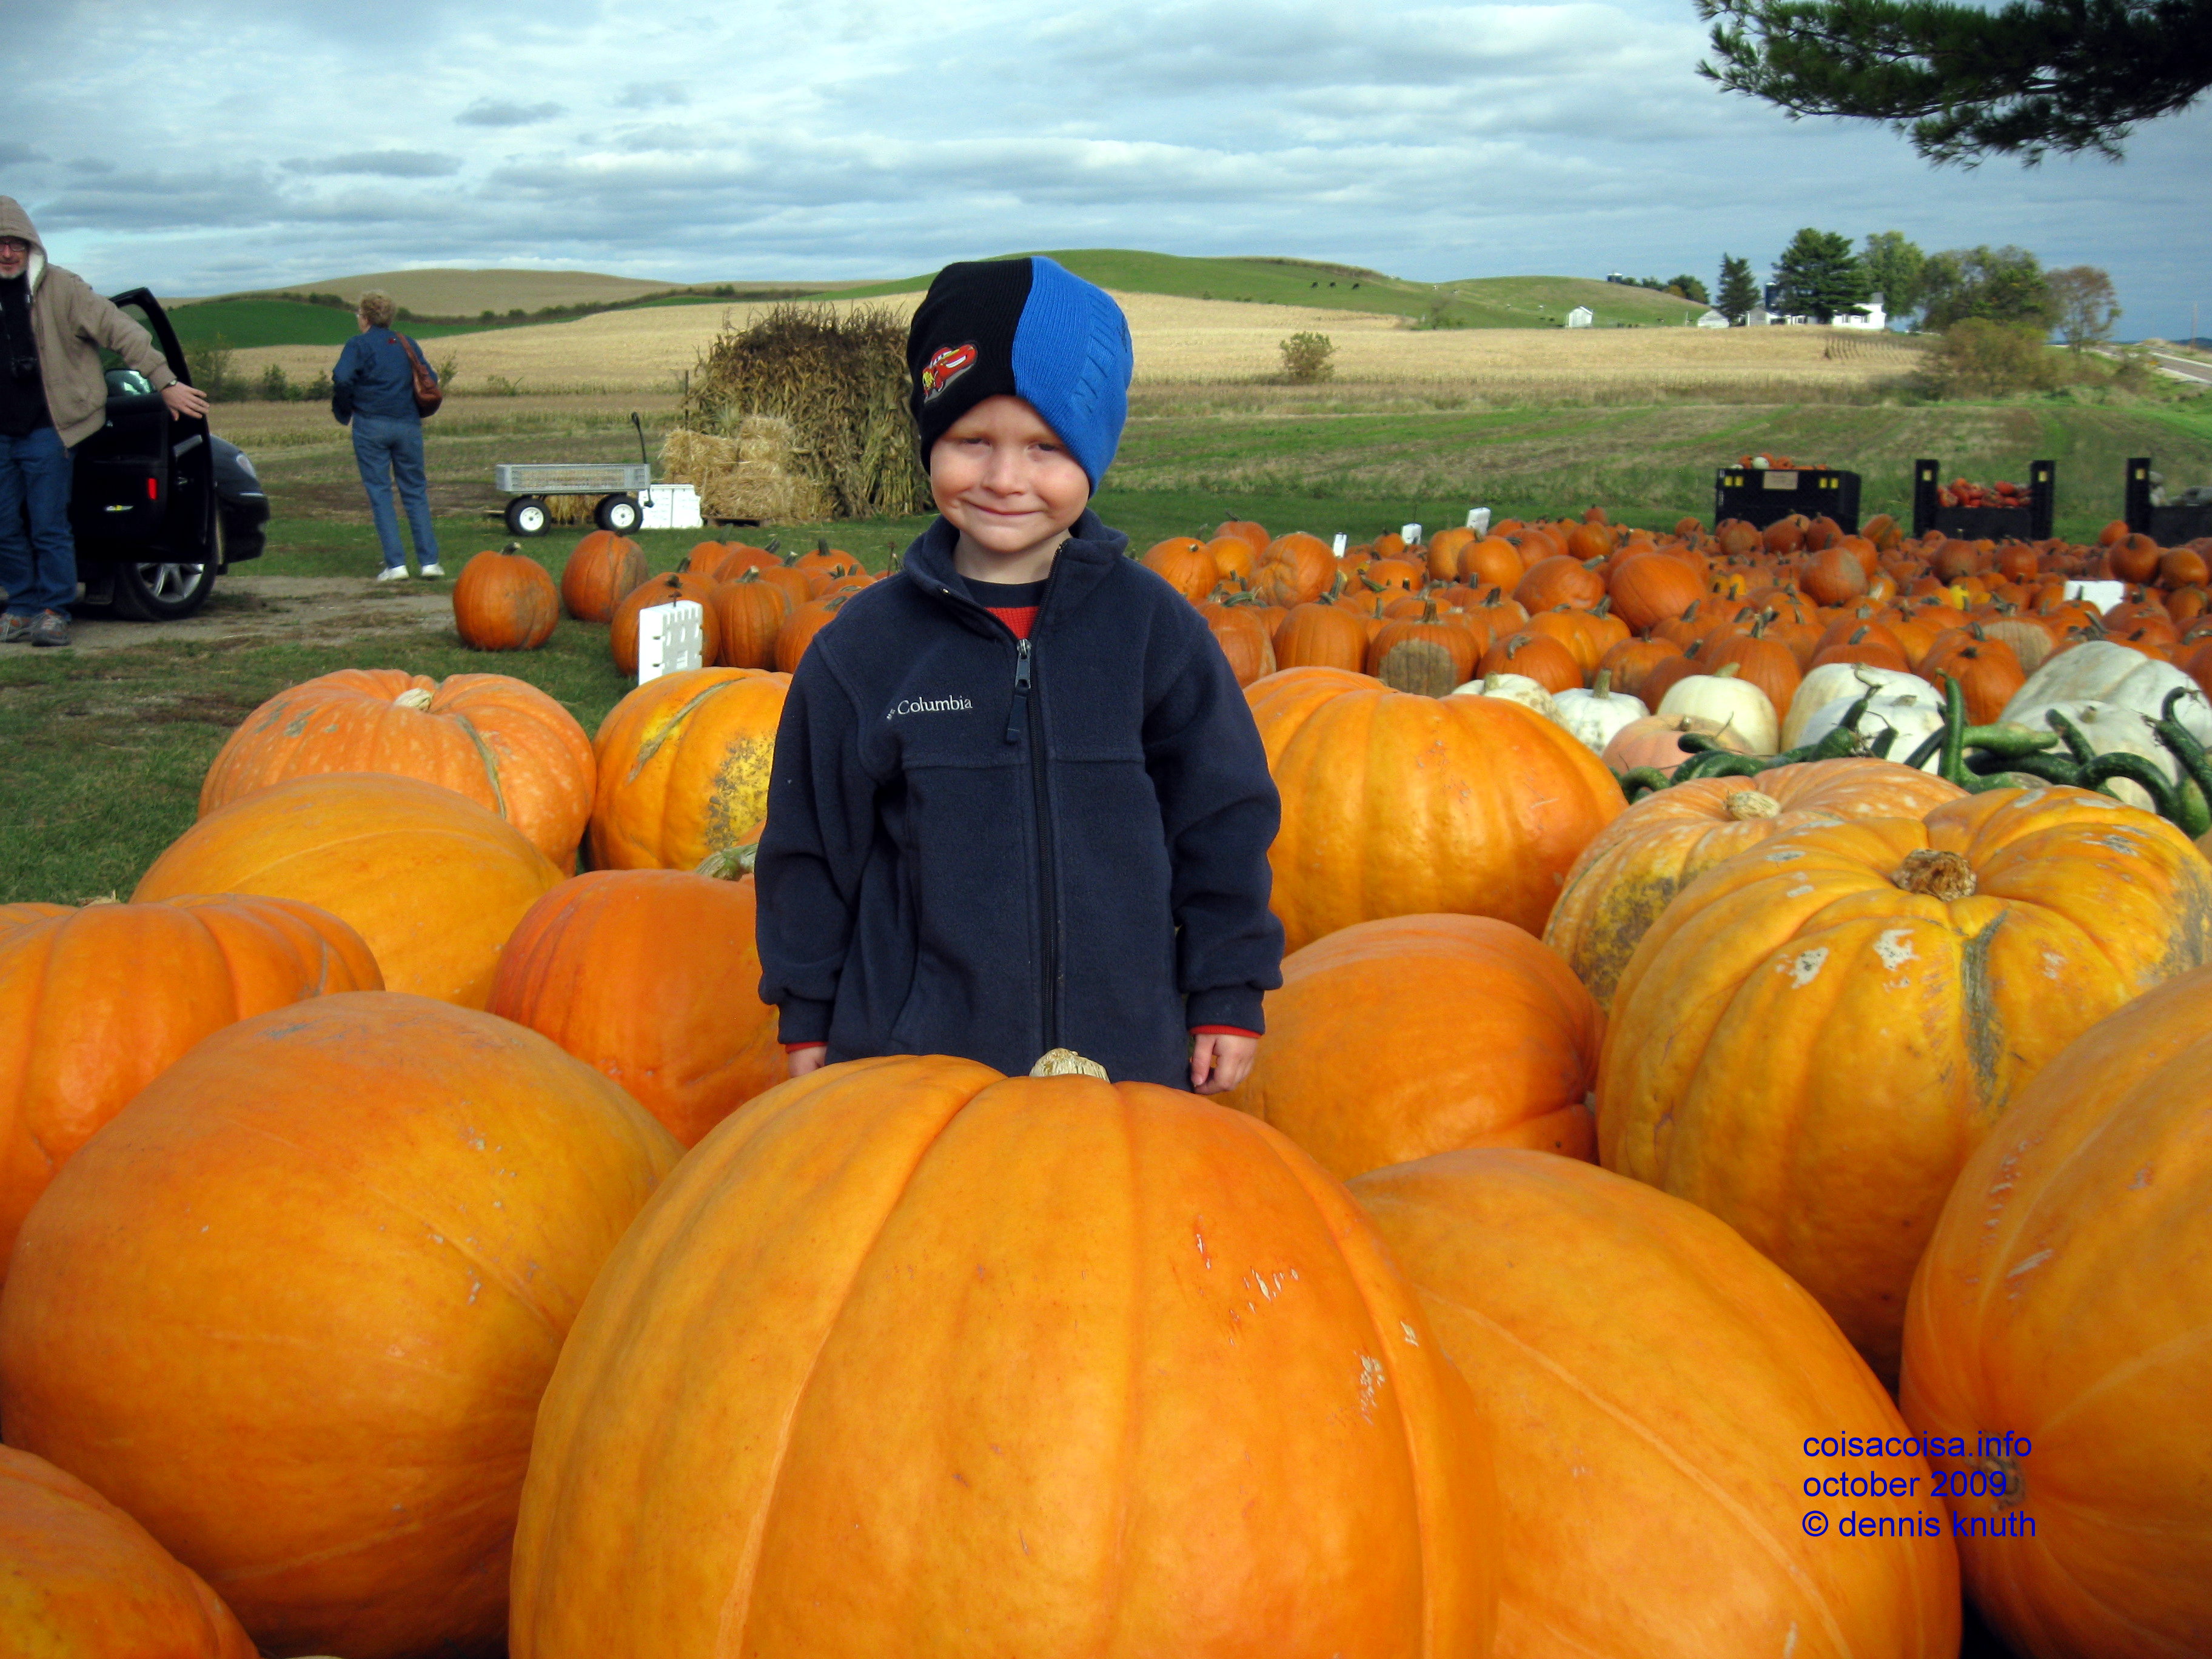 Jared is bigger than the pumpkins